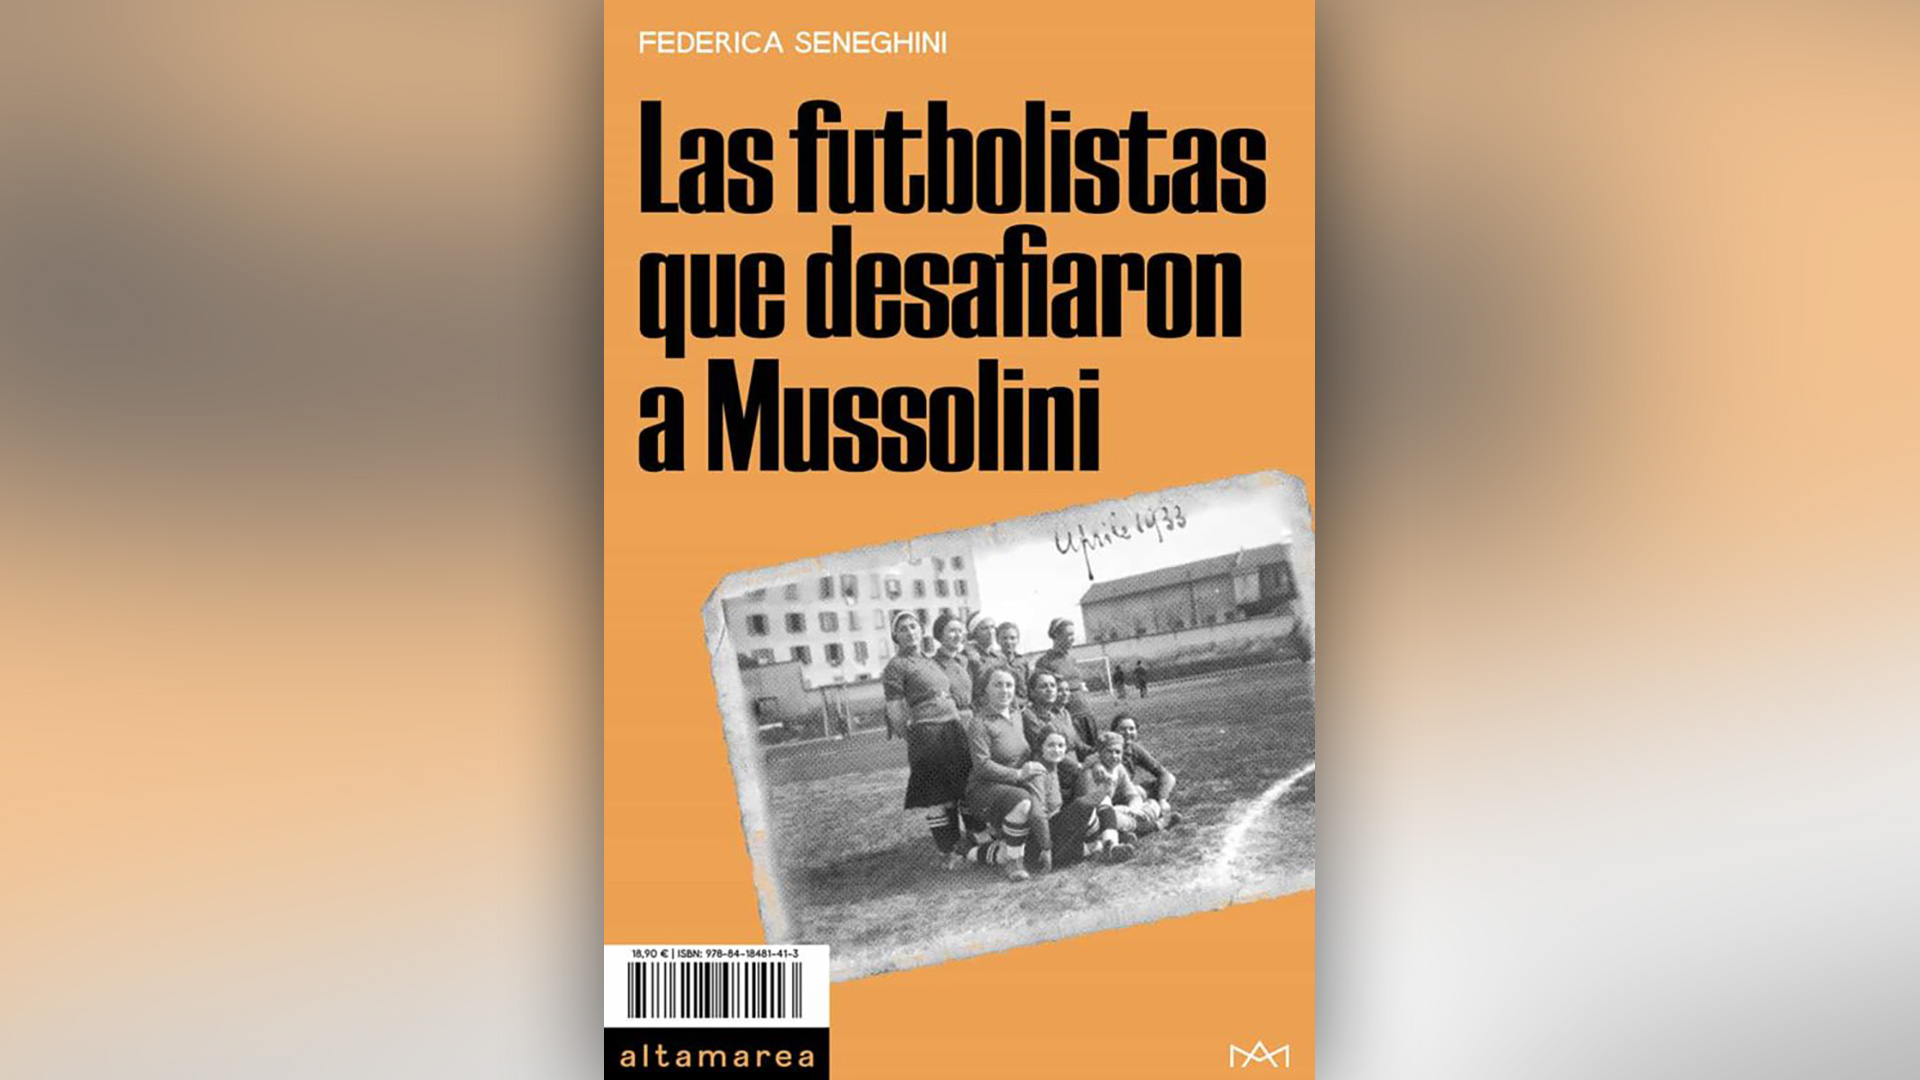 Portada del libro "Las futbolistas que desafiaron a Mussolini", de Federica Seneghini